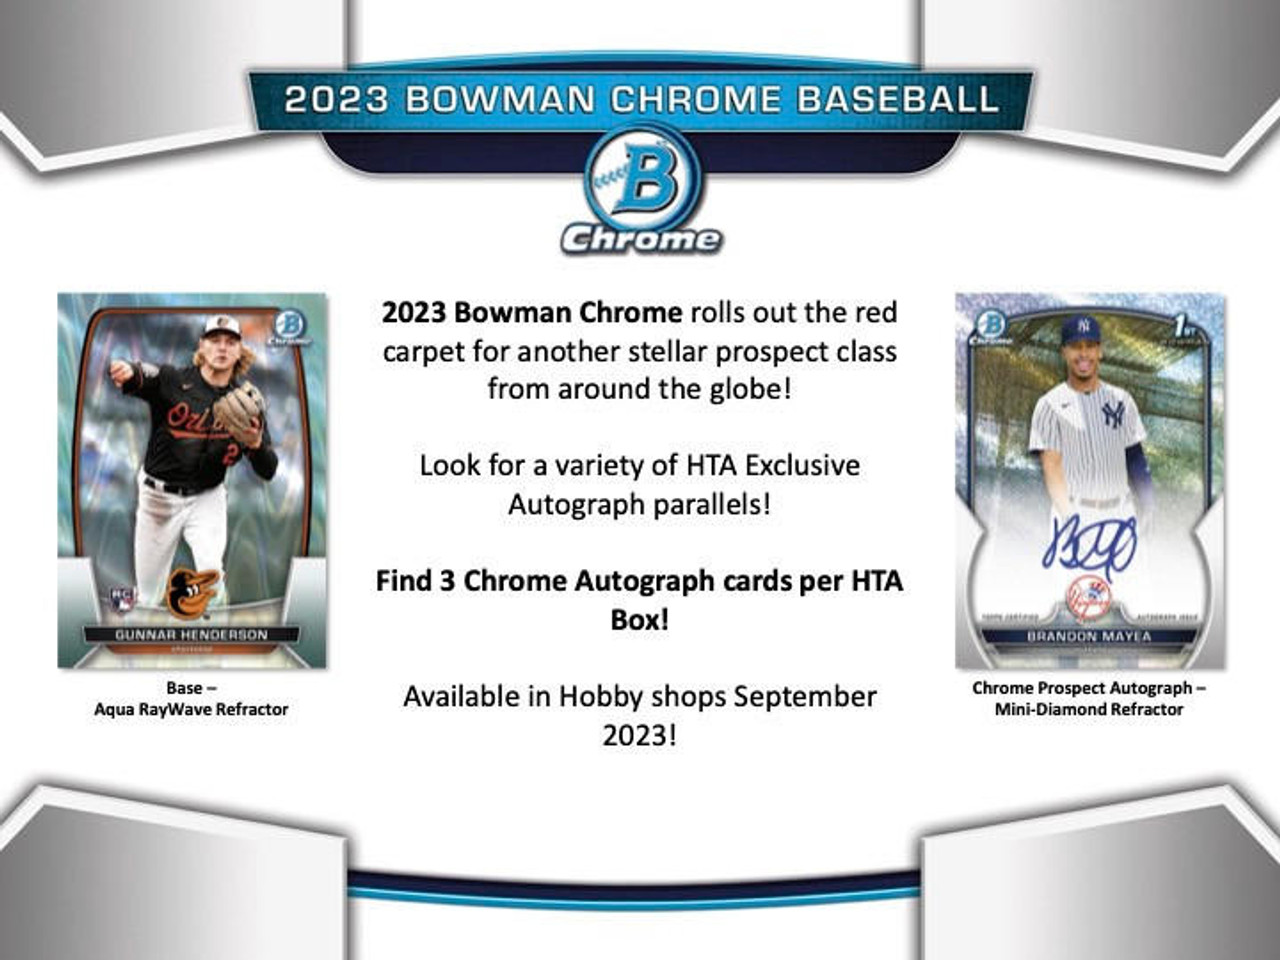 JAMES OUTMAN Dodgers 2022 Bowman Chrome Arizona Fall League